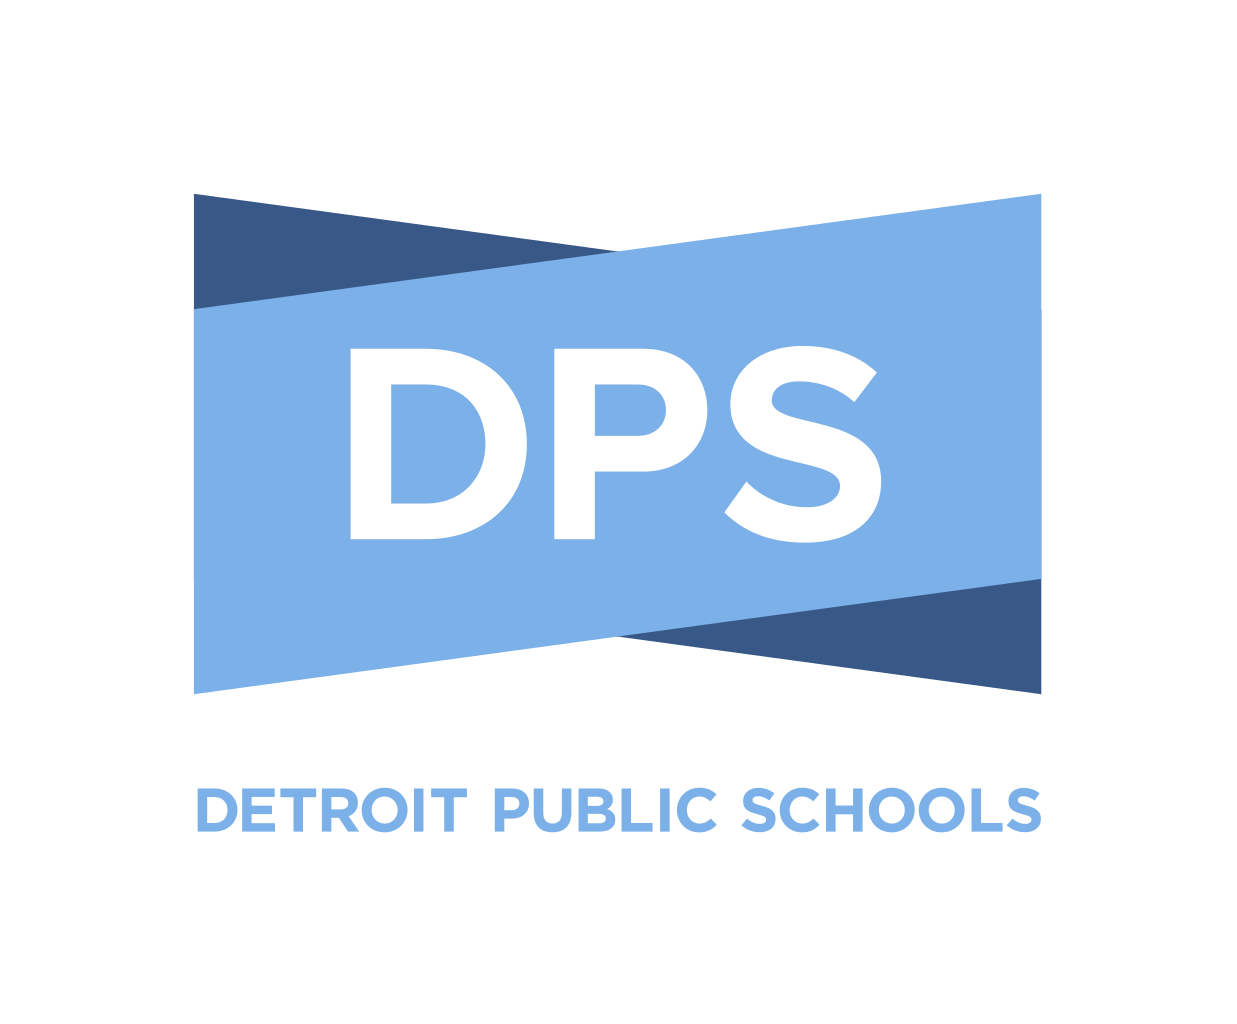 Image courtesy of Detroit Public Schools via Wikimedia